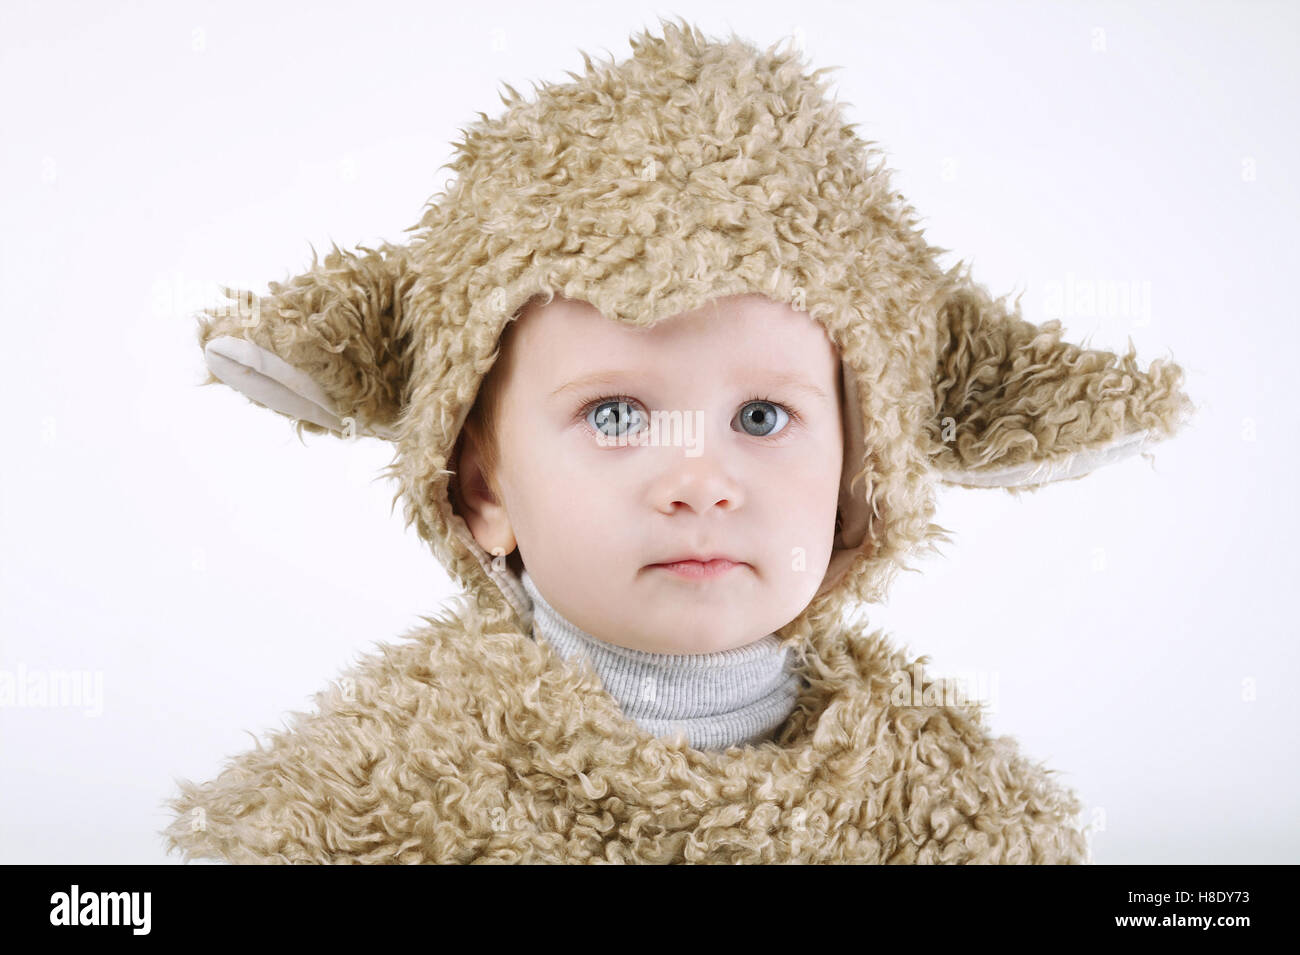 Disfraz de oveja fotografías e imágenes de alta resolución - Alamy